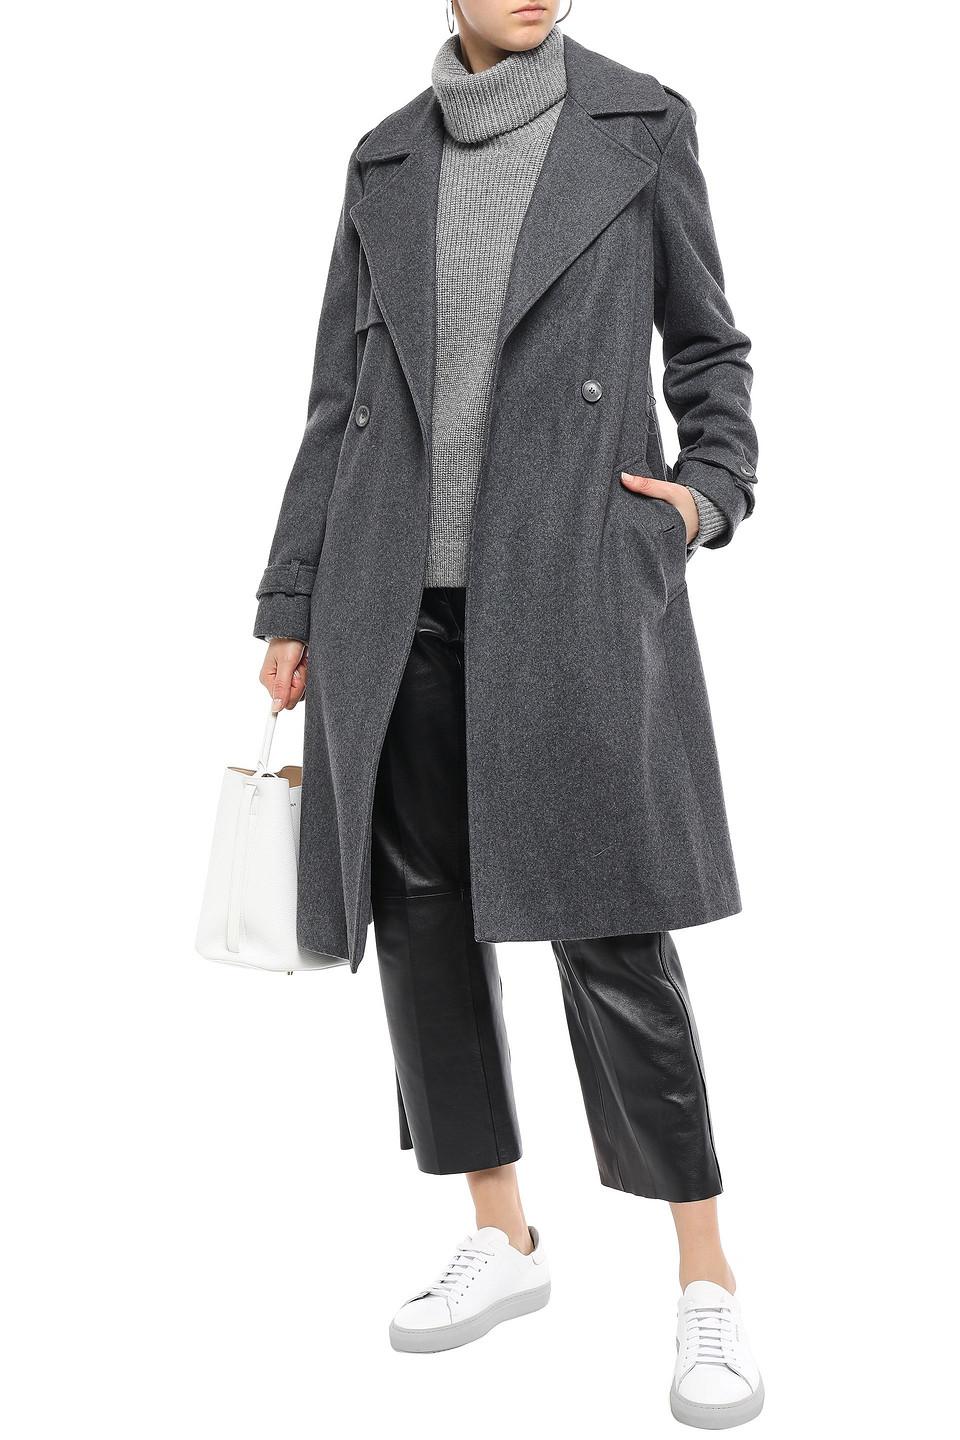 DKNY Wool-blend Felt Trench Coat Charcoal in Grey - Lyst